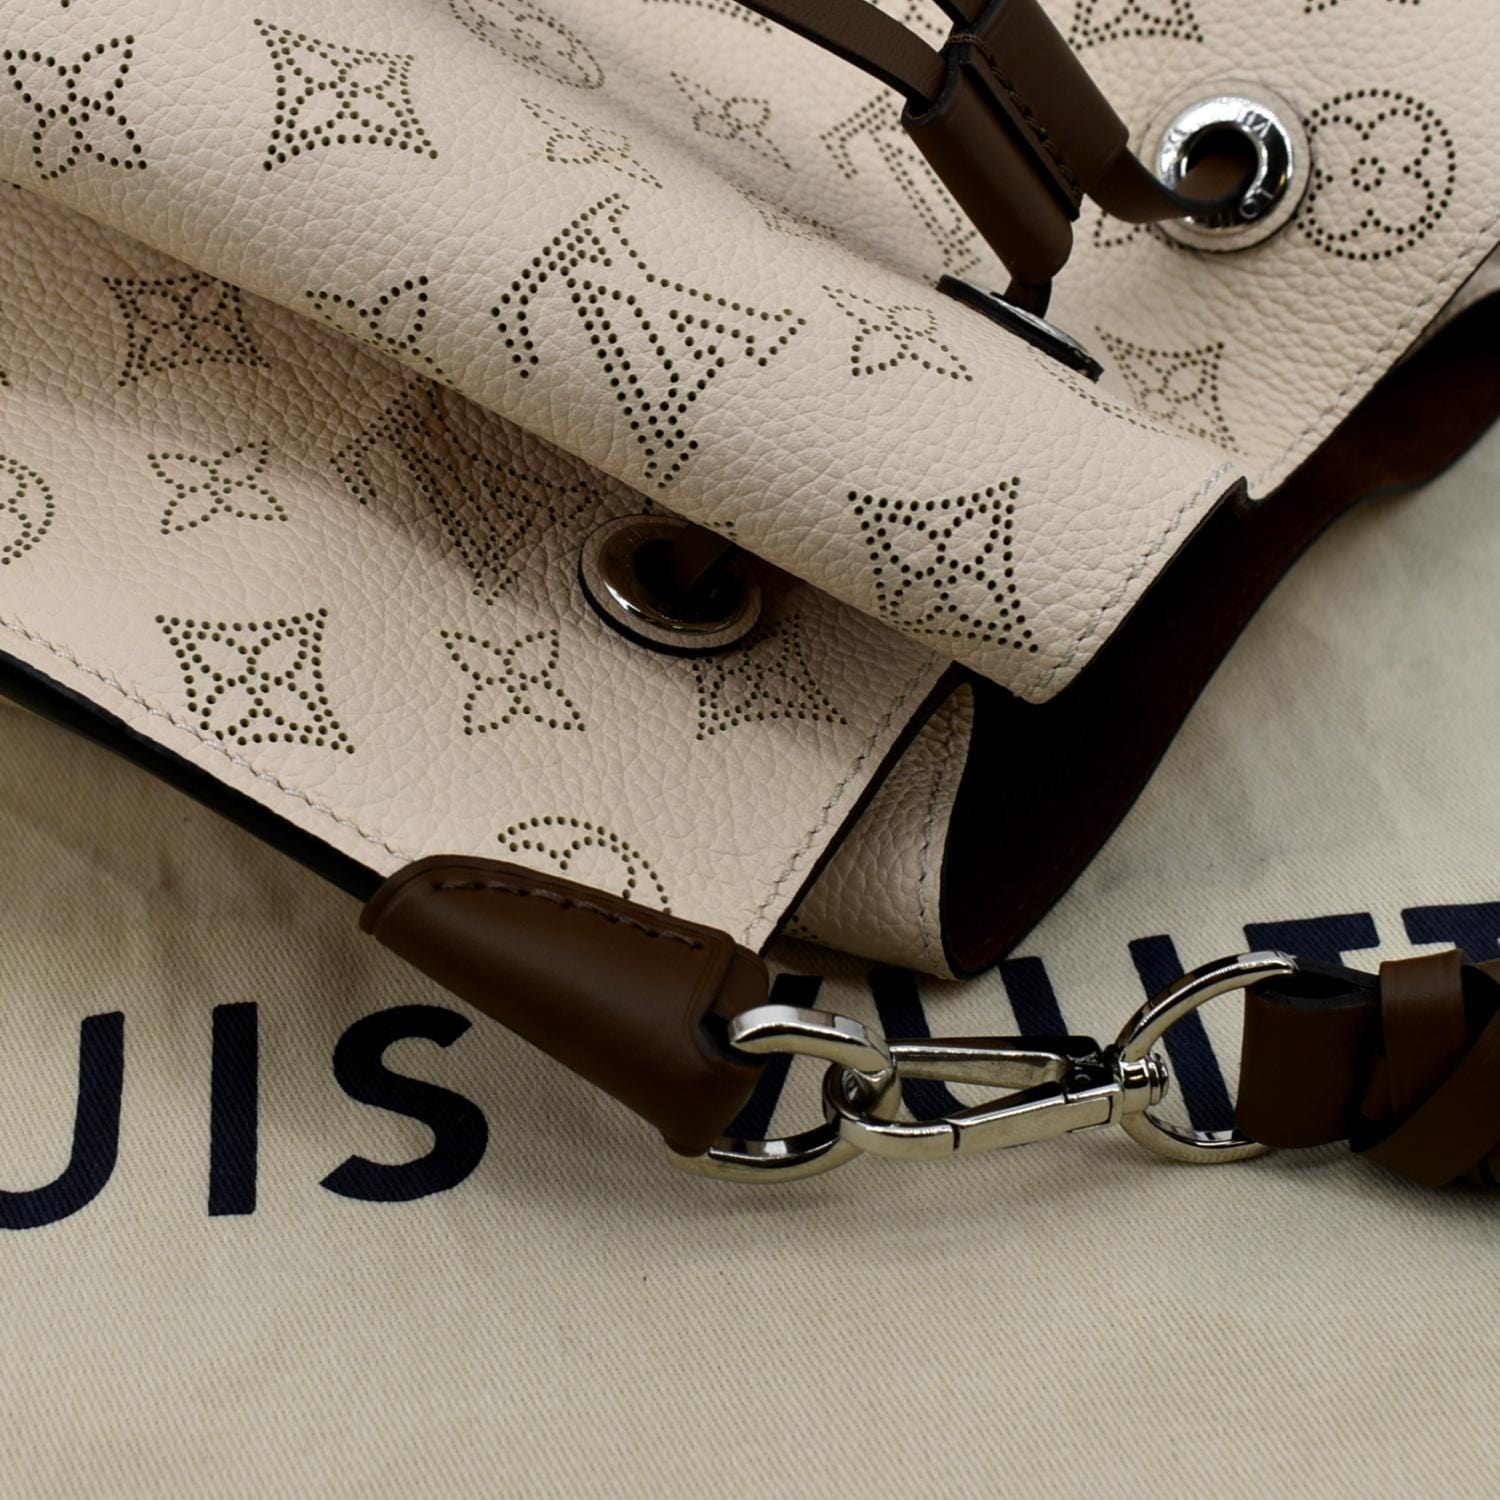 Louis Vuitton, Muria Mahina Shoulder Bag, cream fine per…